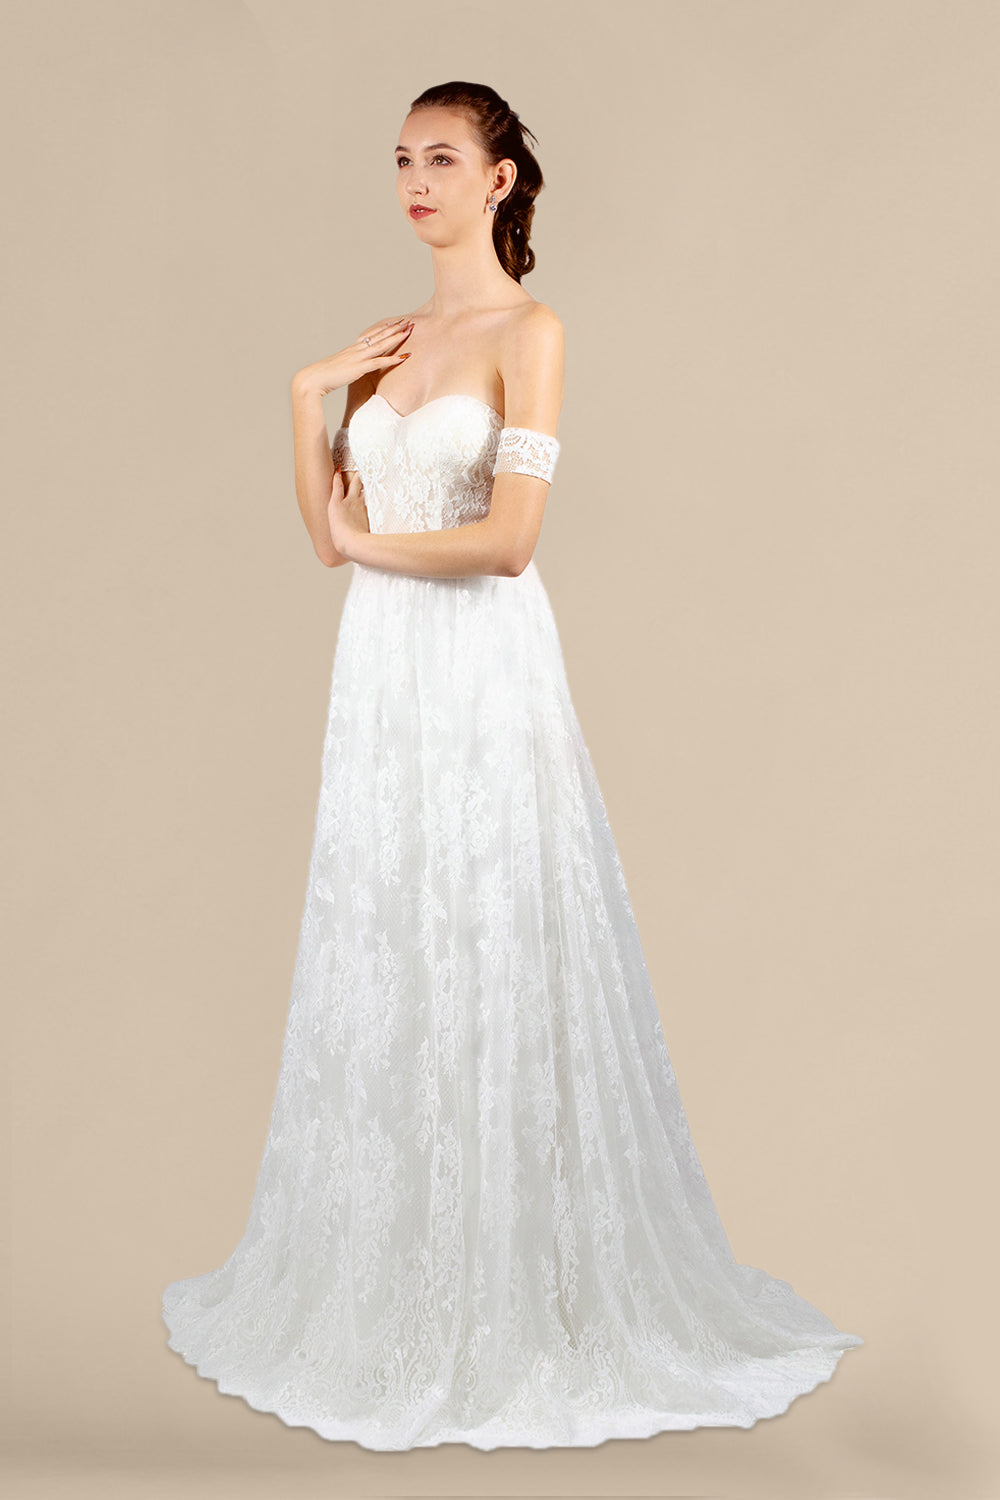 custom made wedding gowns australia boho lace A line wedding dresses envious bridal & formal